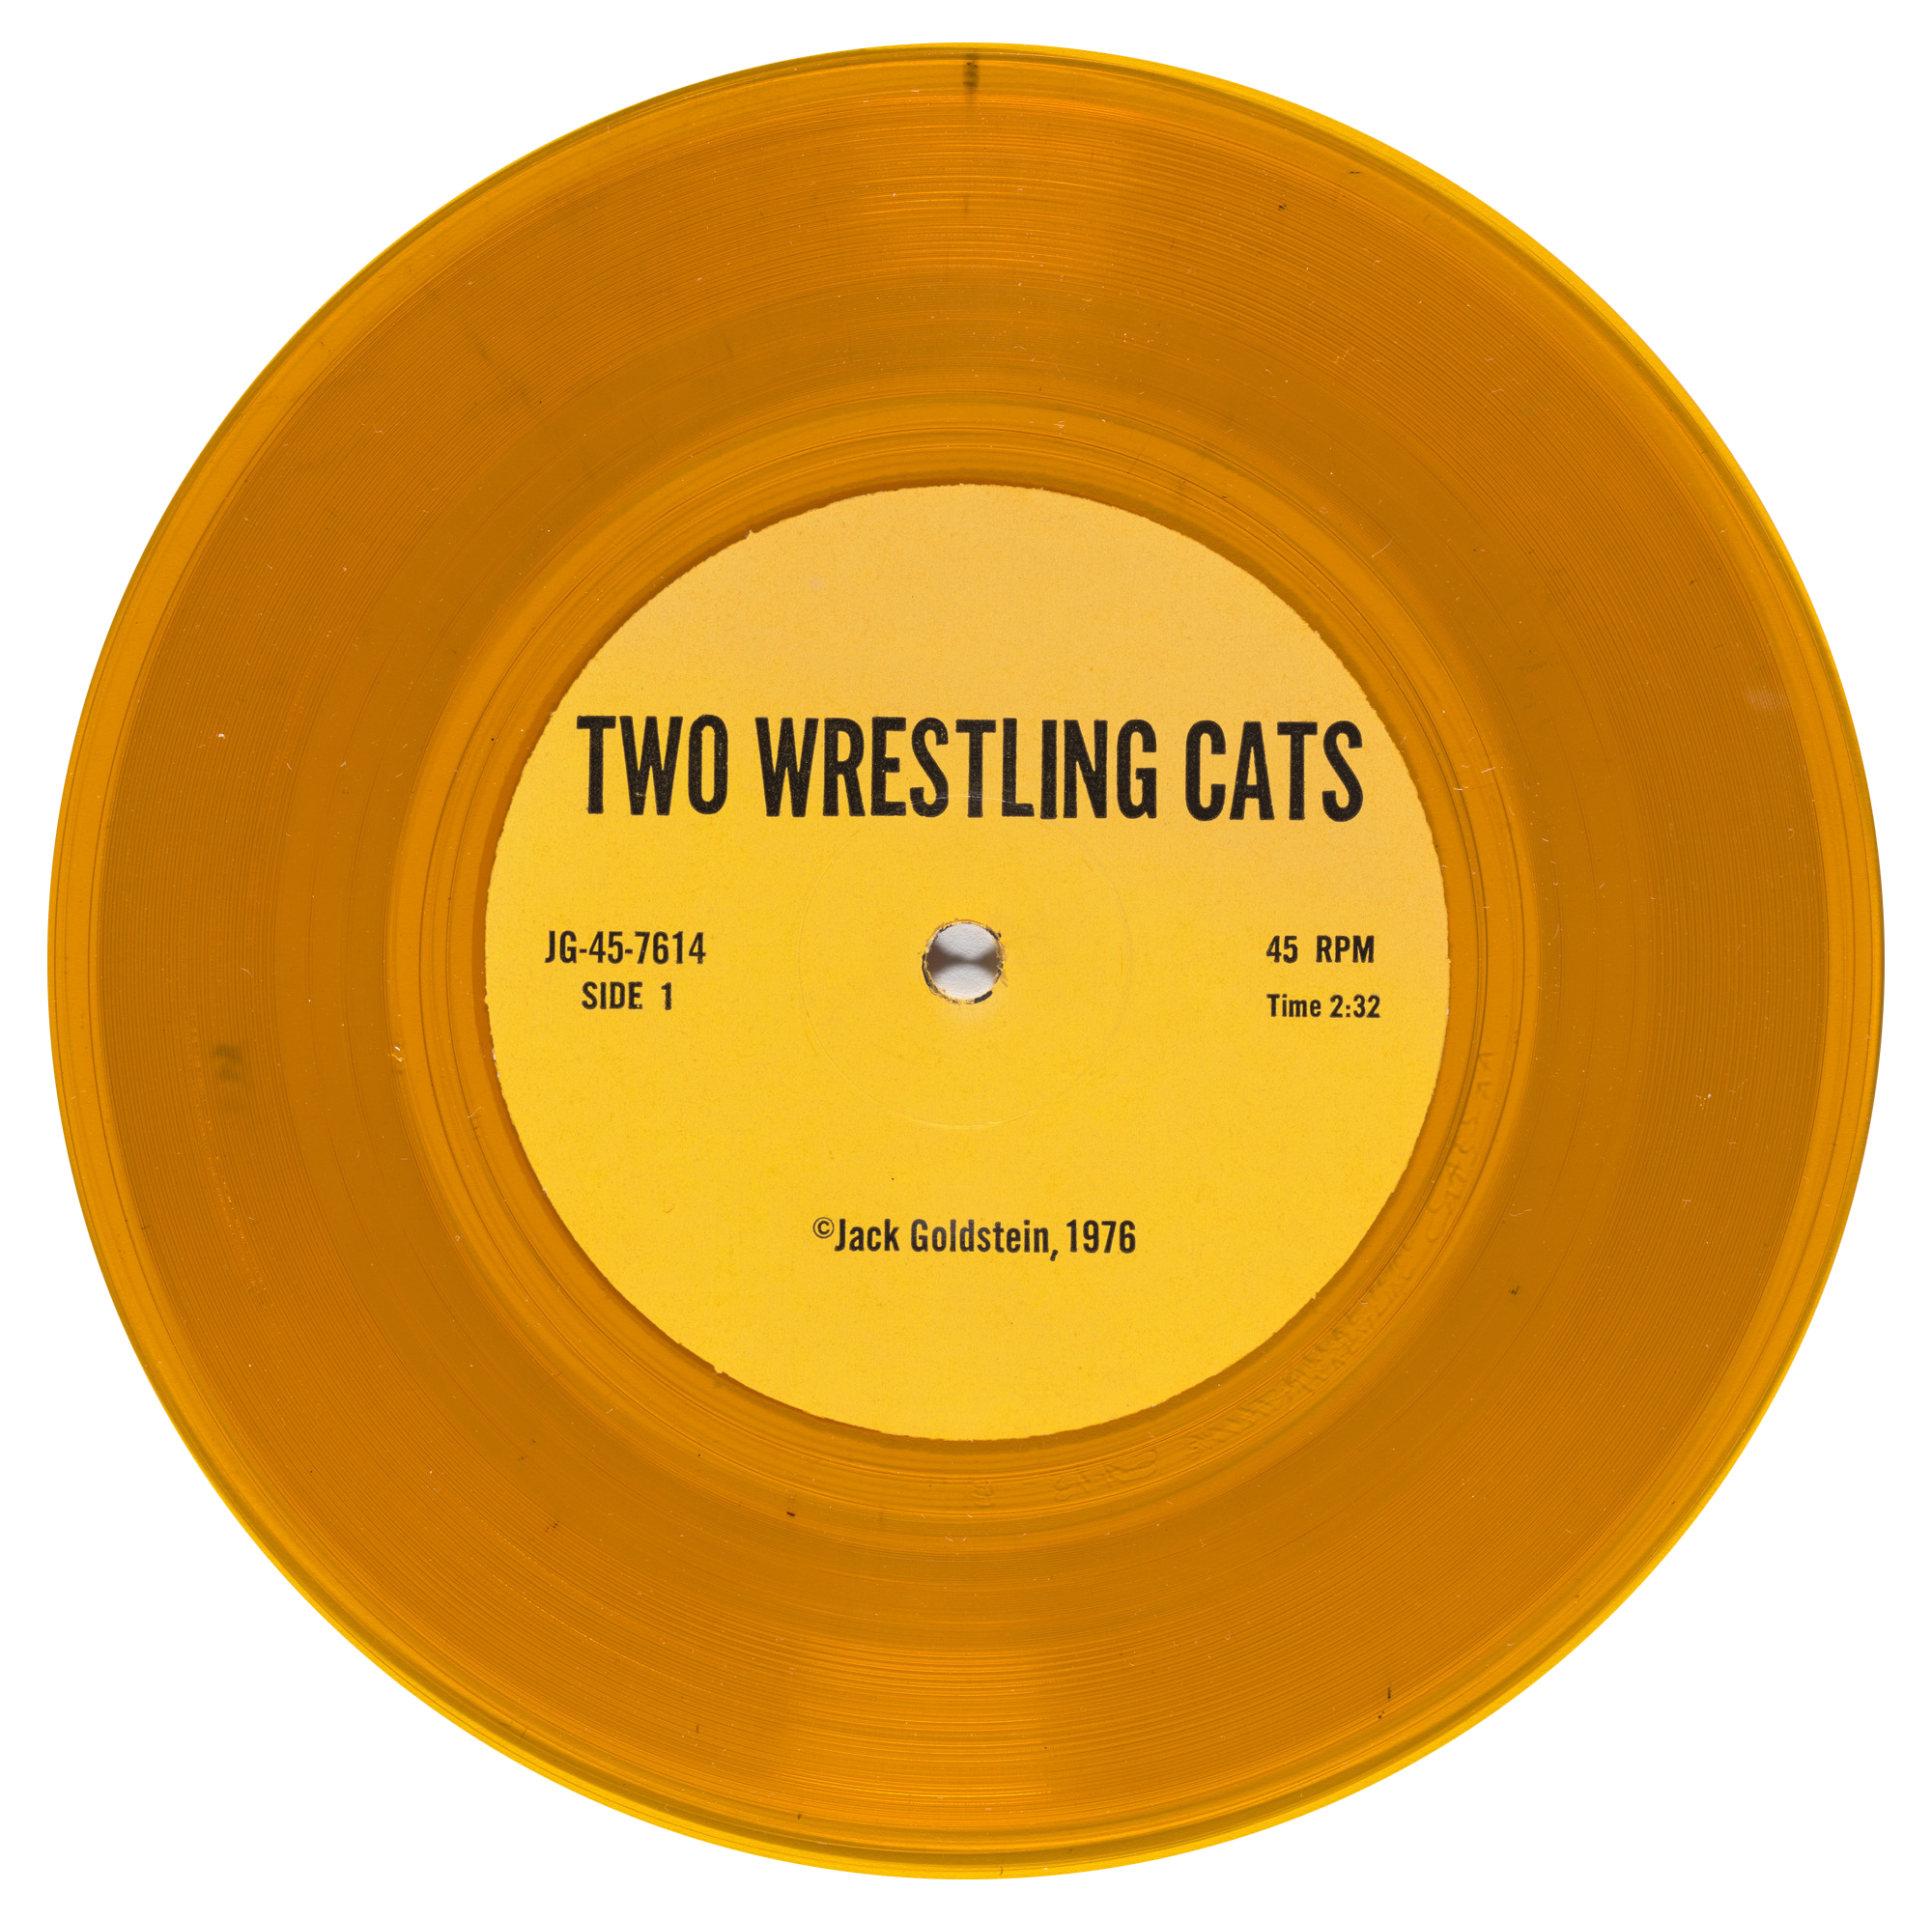  Two Wrestling Cats
Yellow vinyl - 45 rpm 7-inch record

Two Wrestling Cats est un des neuf éléments constitutifs de :
A Suite of Nine 45 rpm 7-Inch Records with Sound Effects
1976